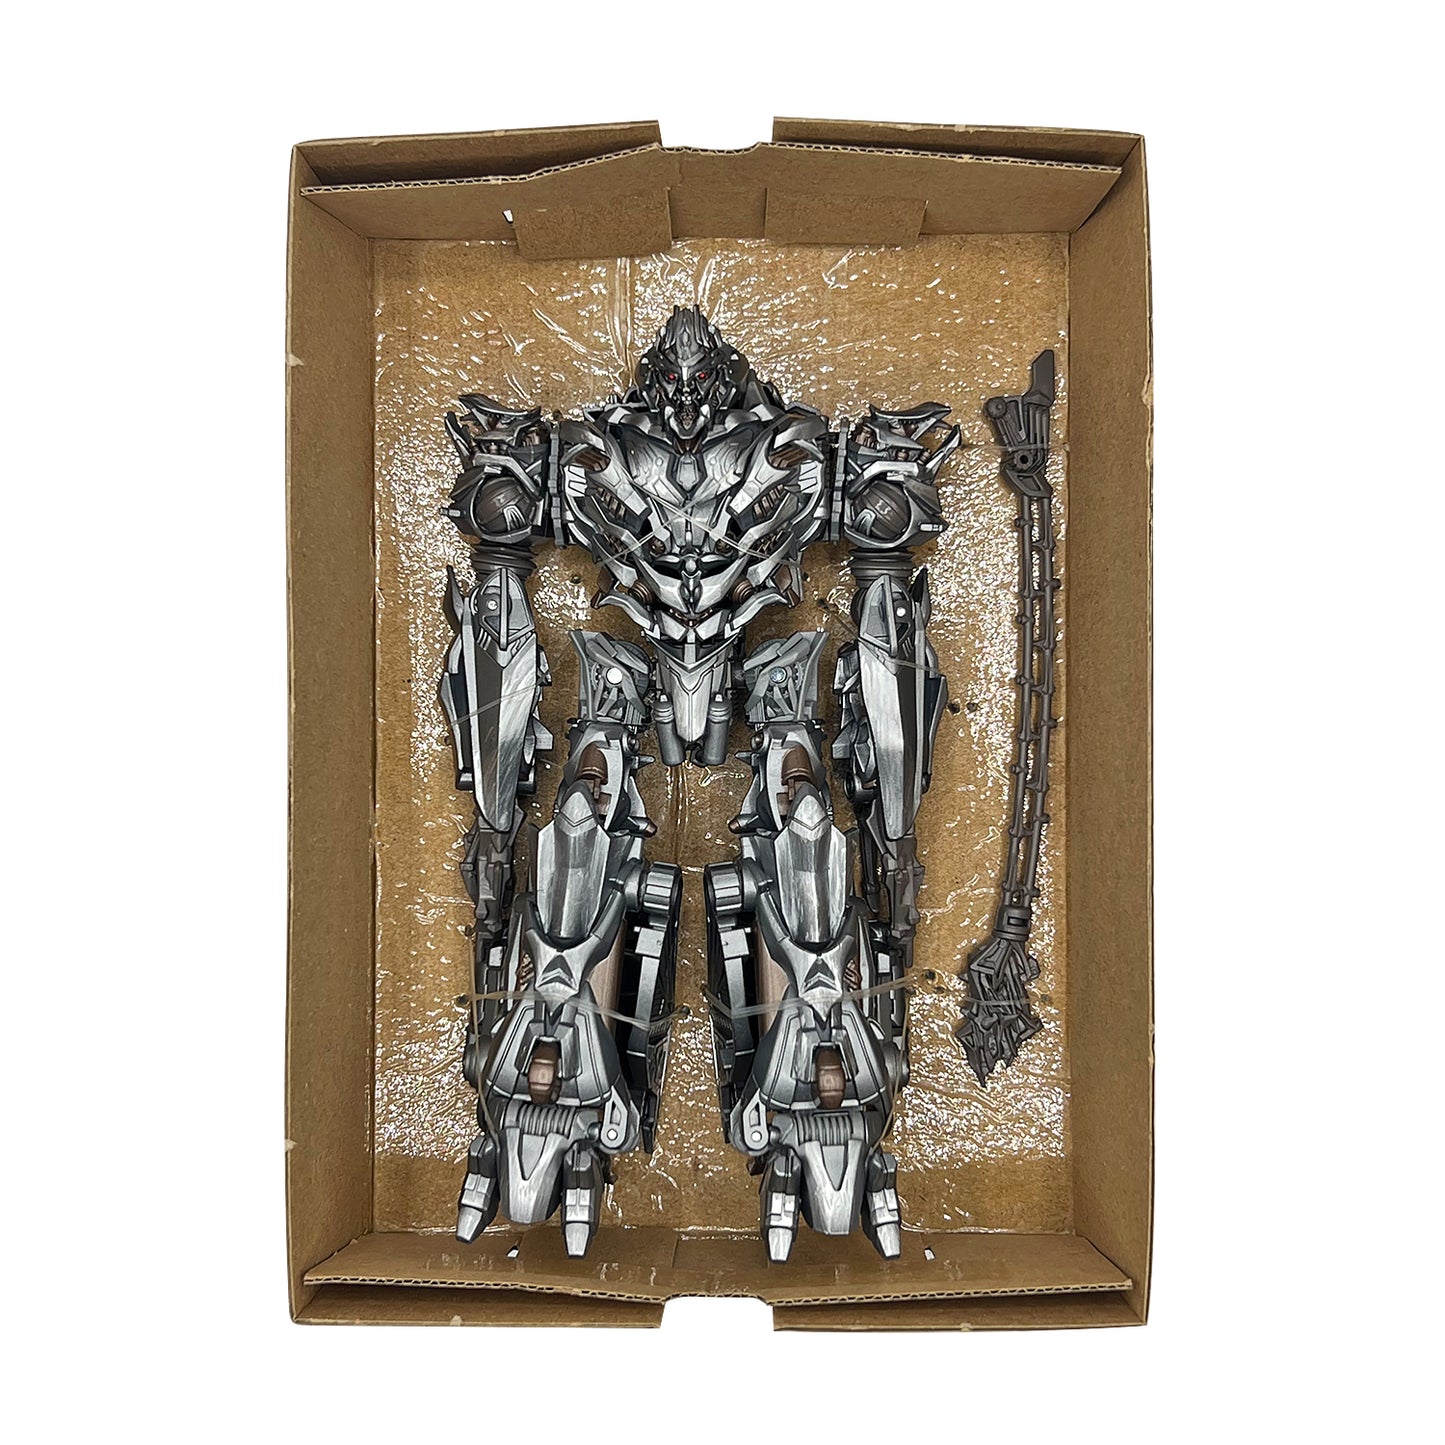 Transformers Takara Tomy Premium Finish SS-03 Megatron Action Figure, Original